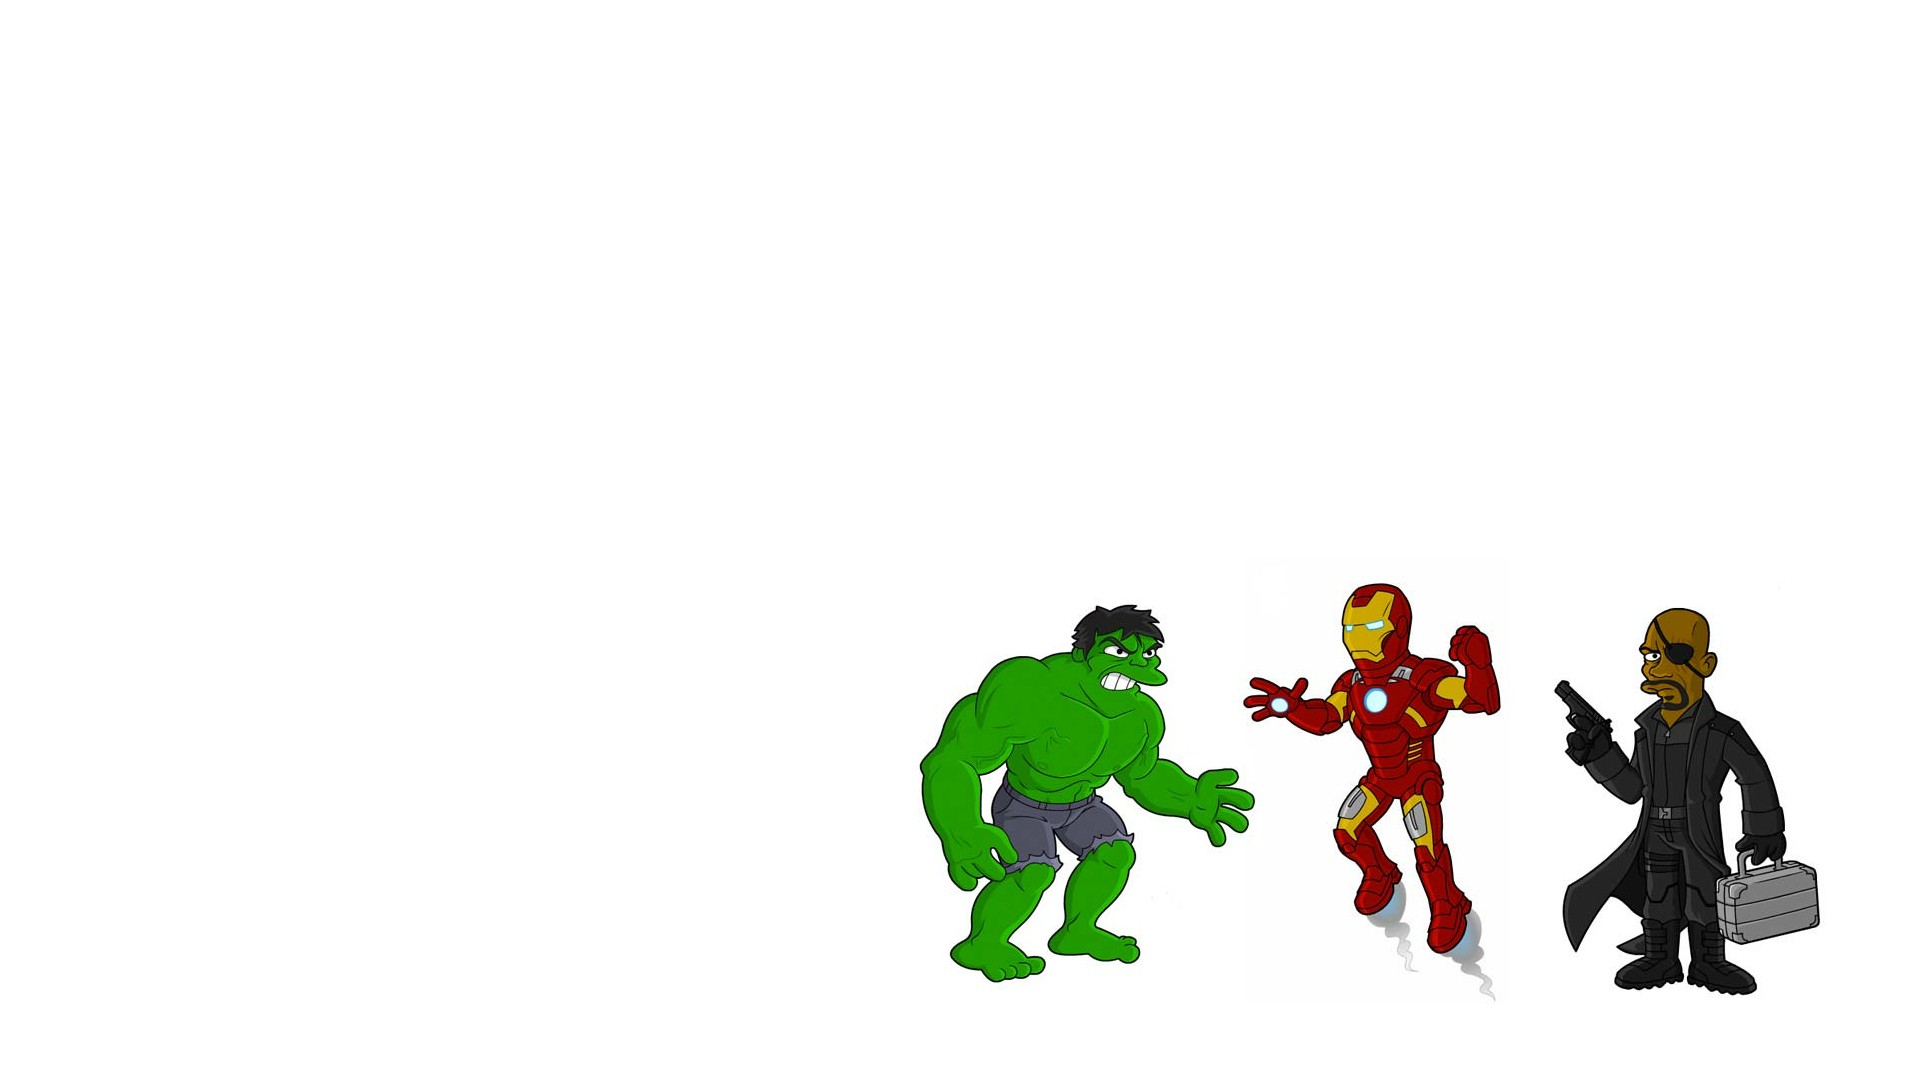 Hulk (comic character), Iron Man, The Simpsons, The Avengers, Nick Fury - desktop wallpaper